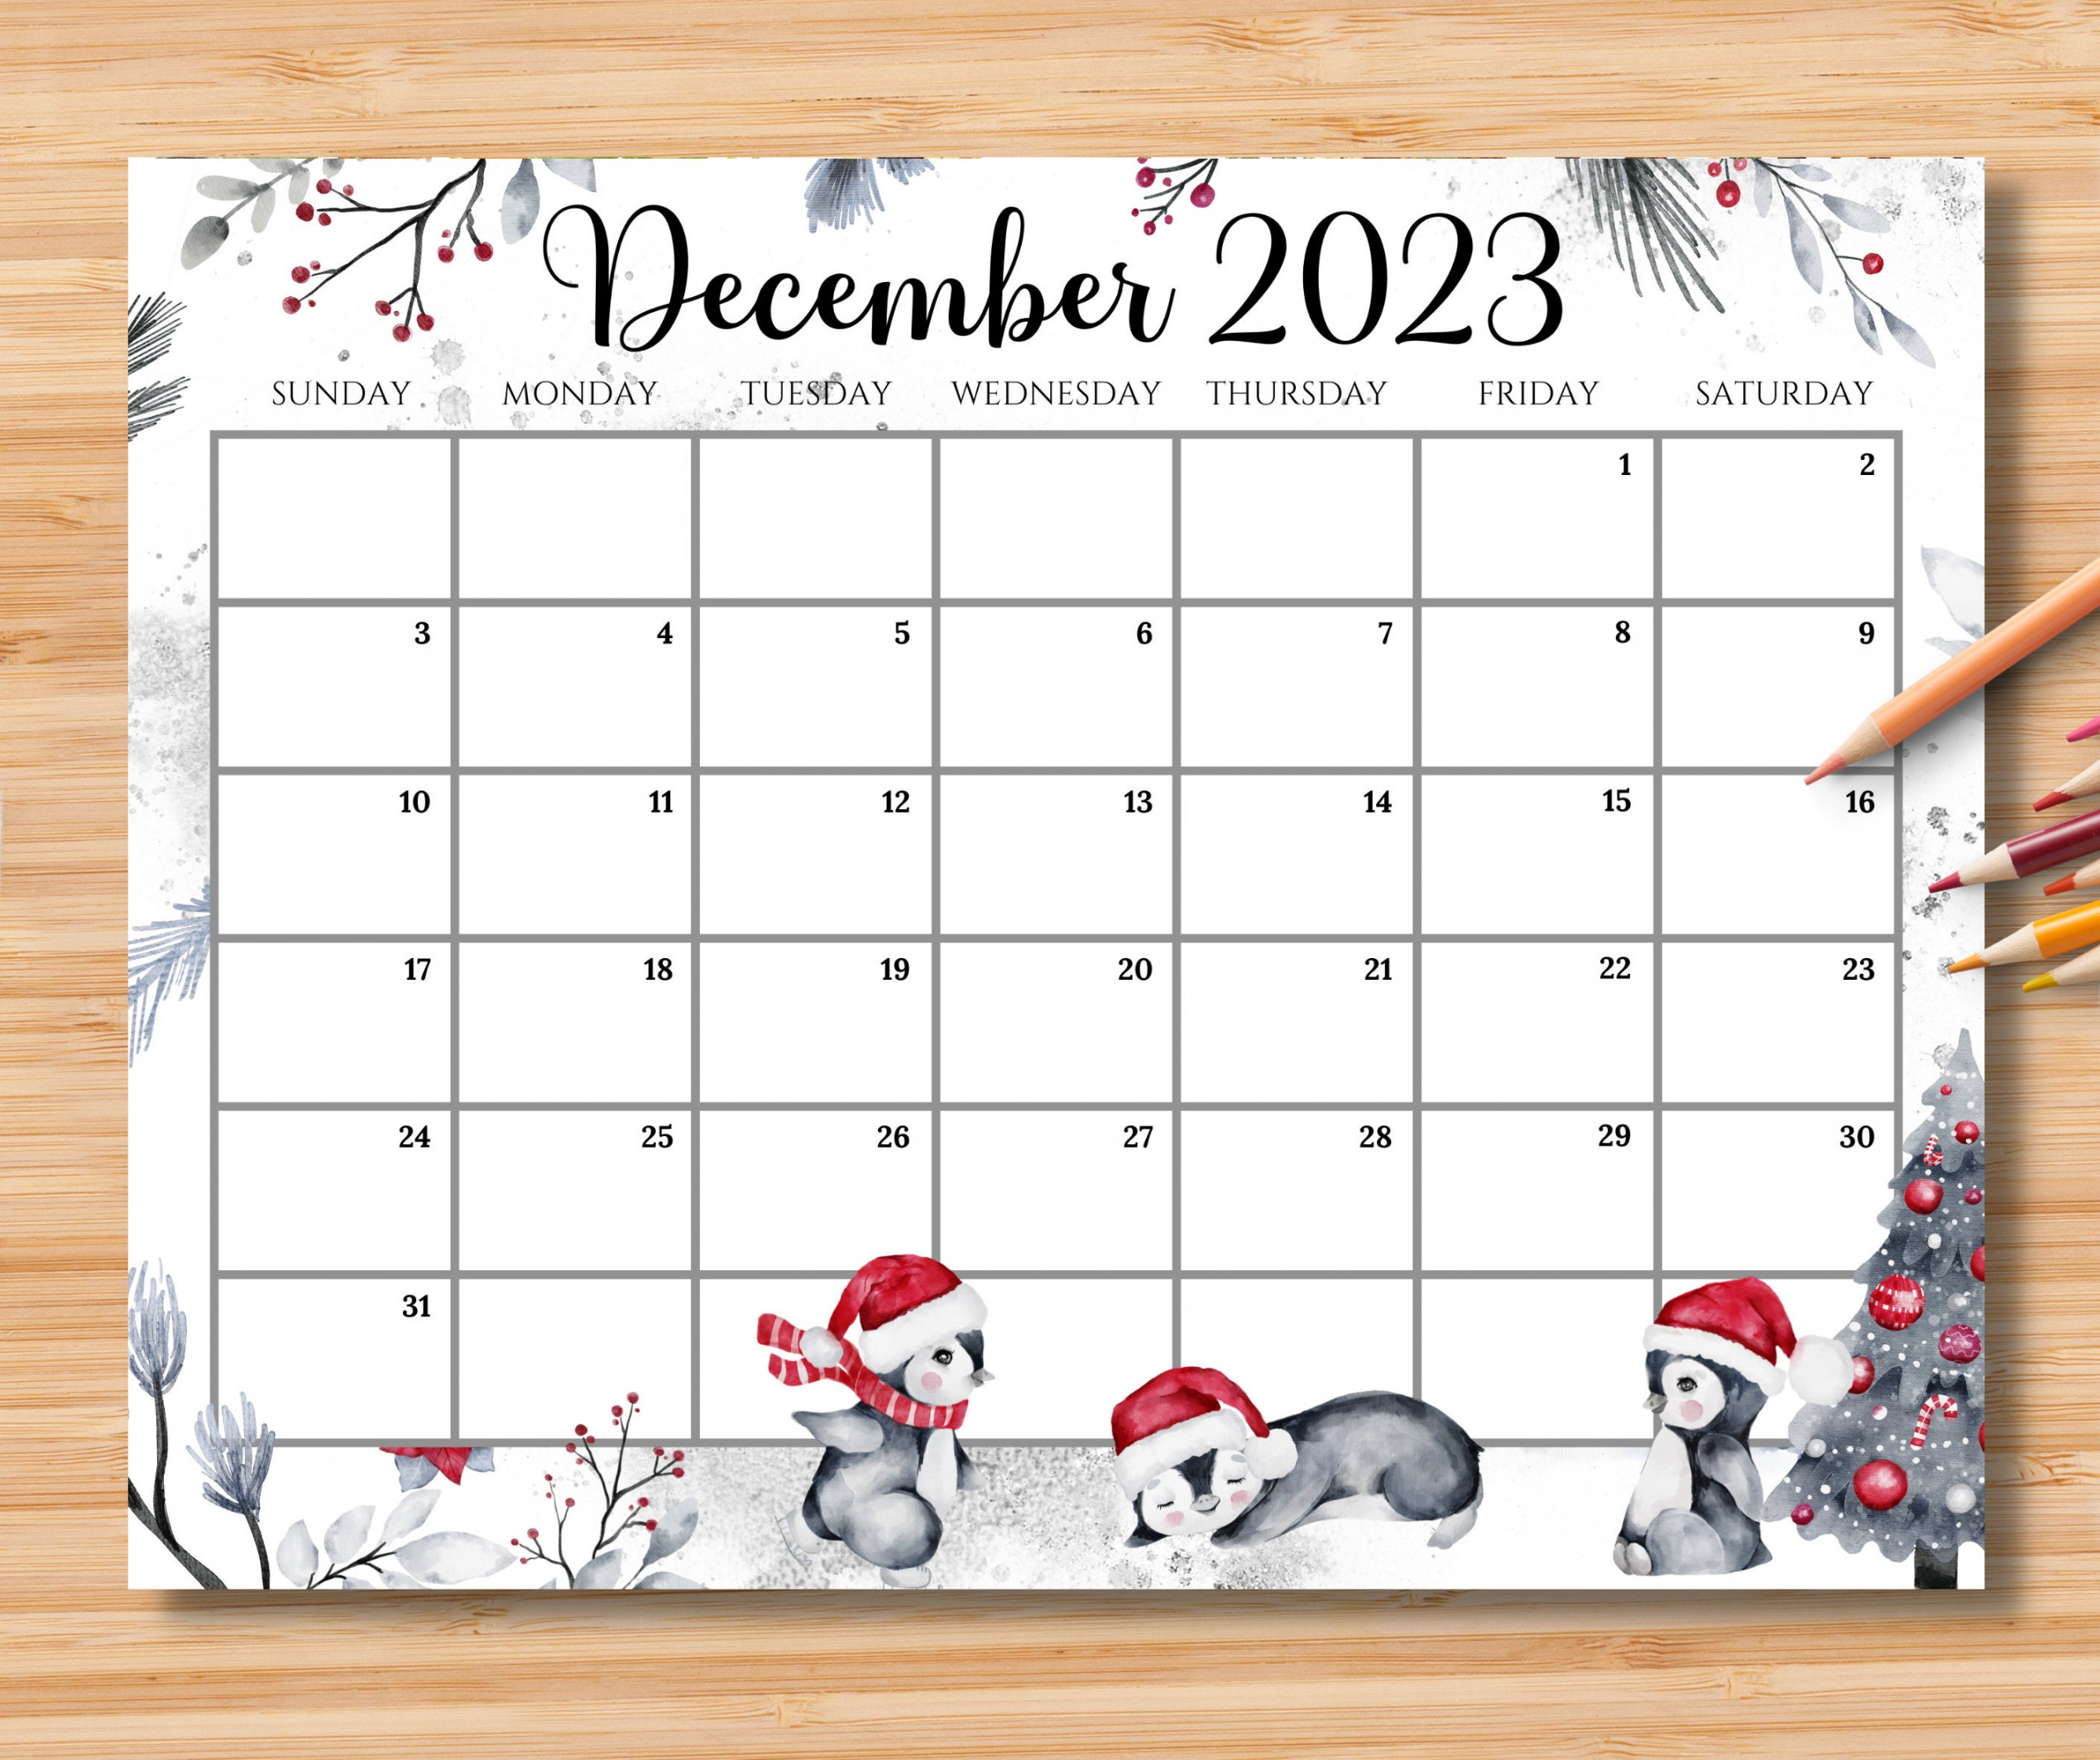 EDITABLE December  Calendar Joyful Winter Christmas With Cute